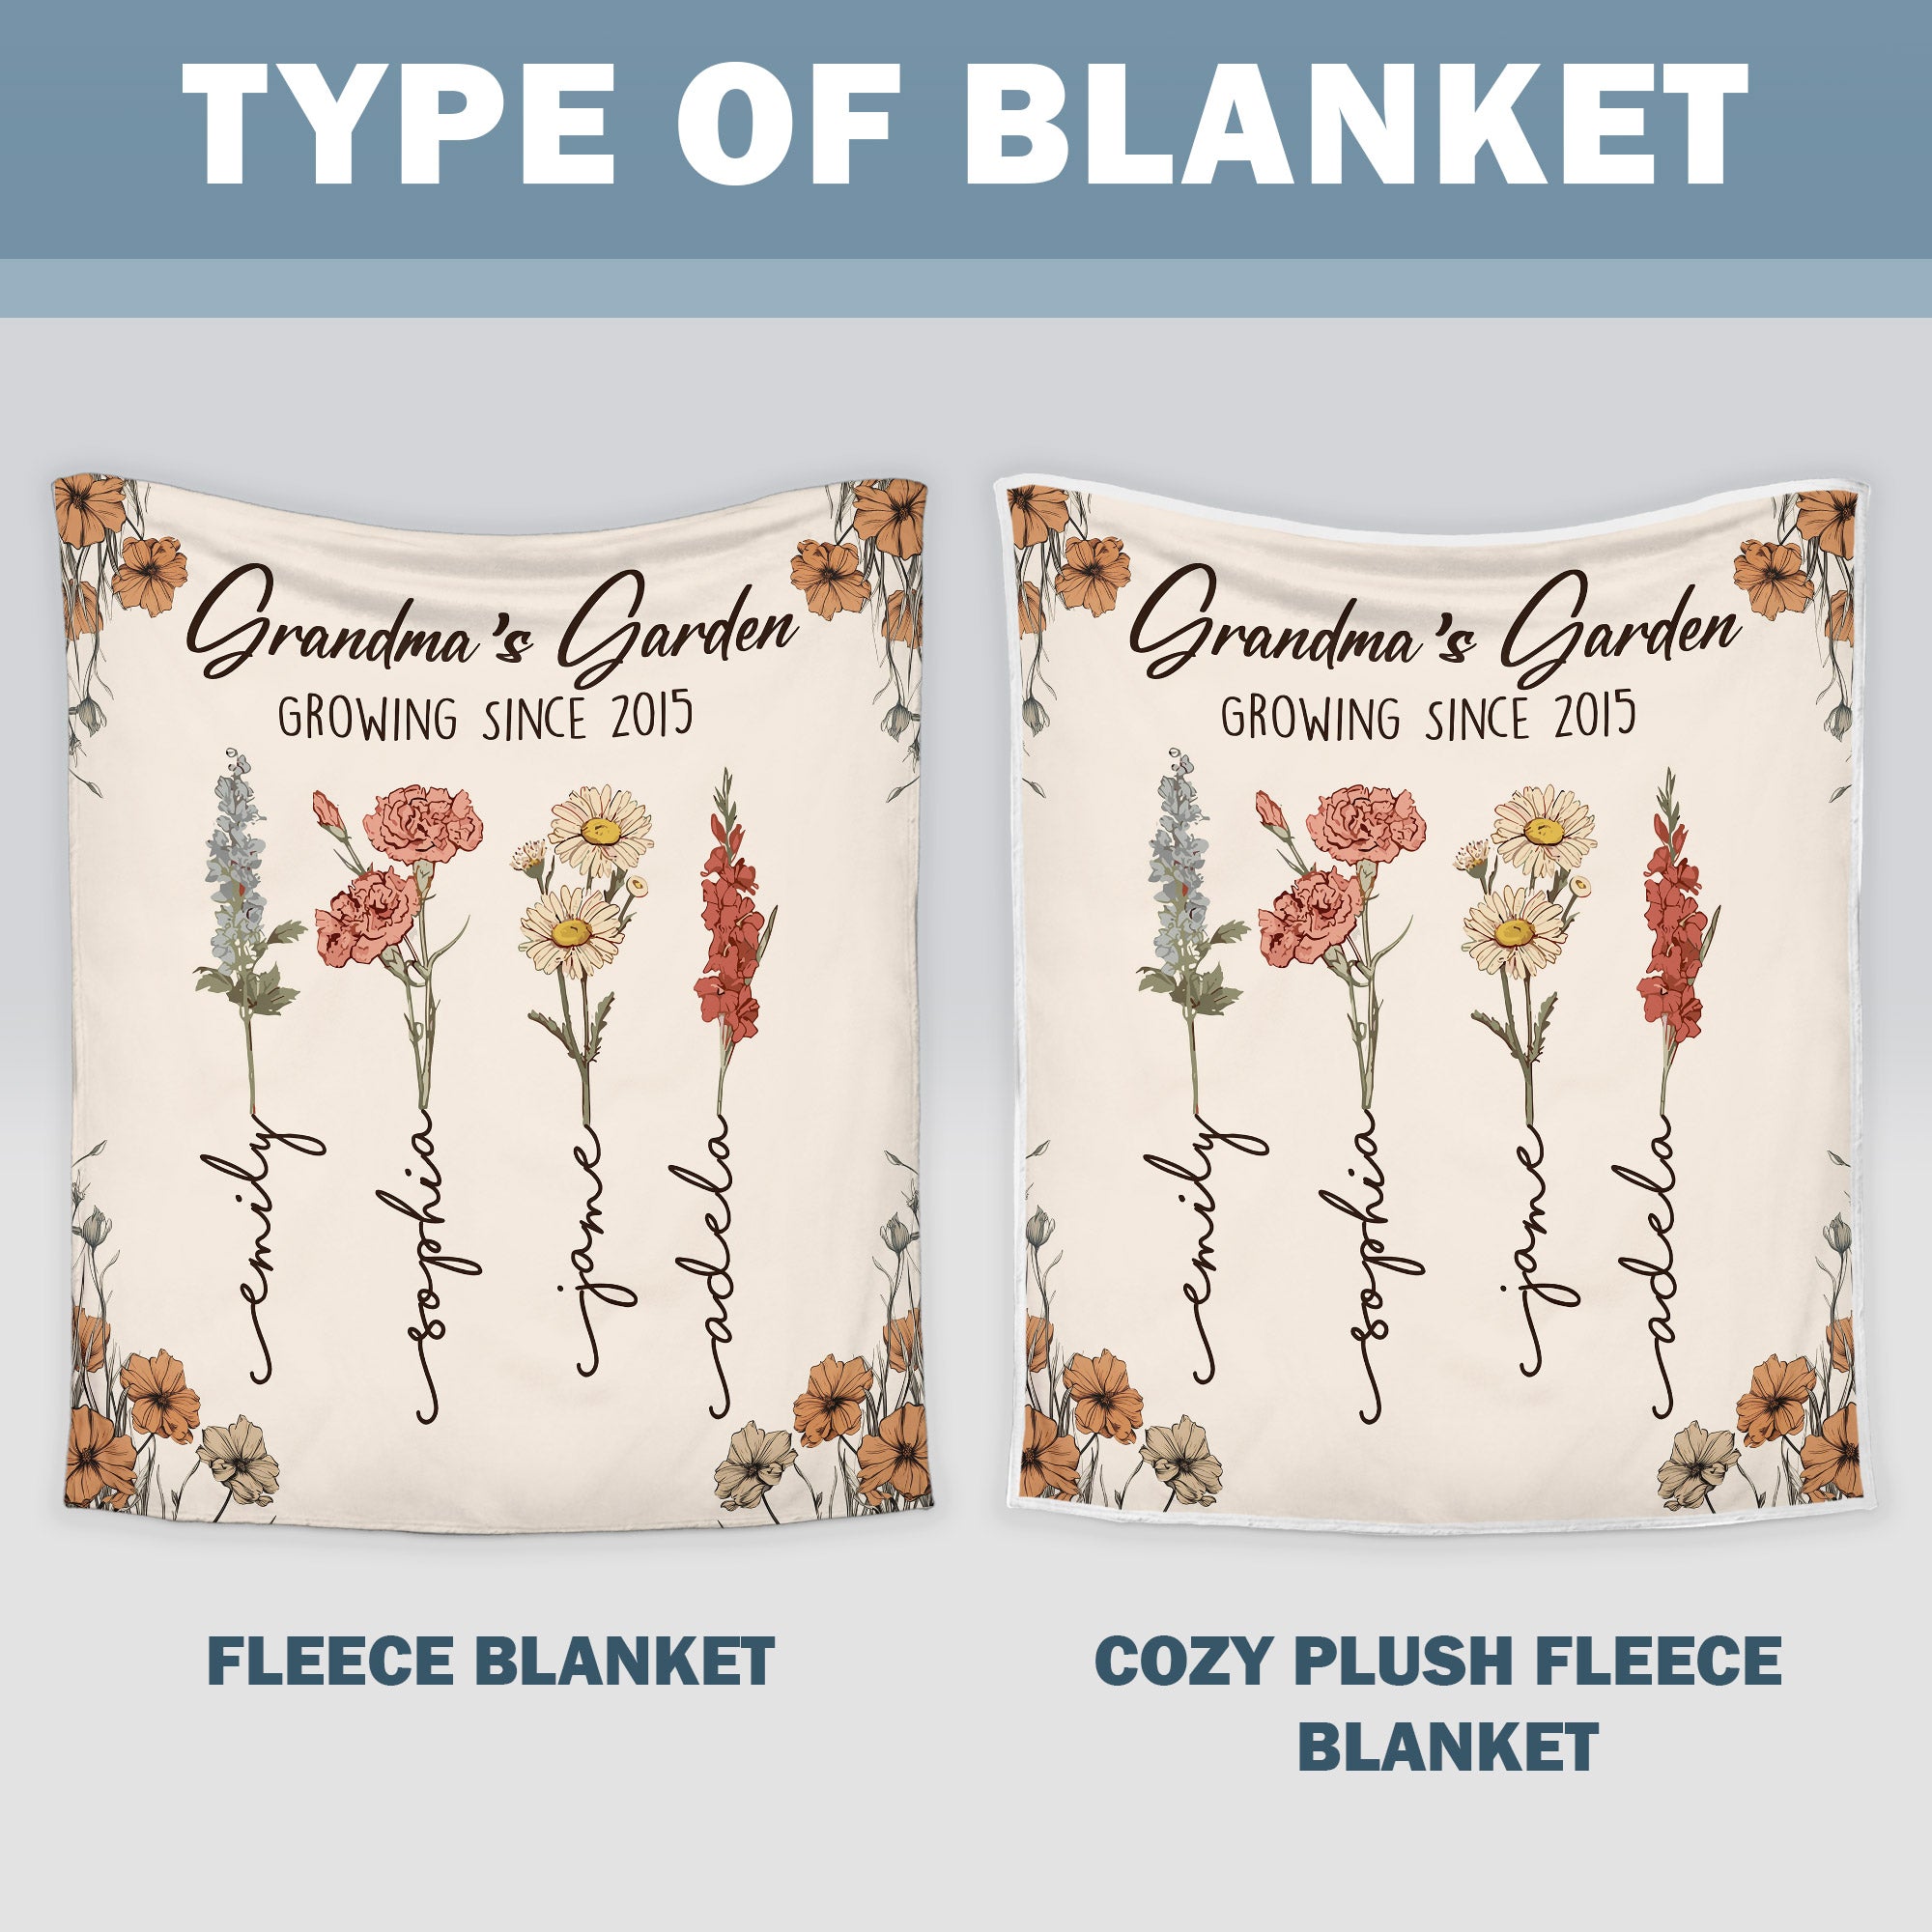 Grandma's Garden Growing Since Quilt Blanket - Gift For Grandma